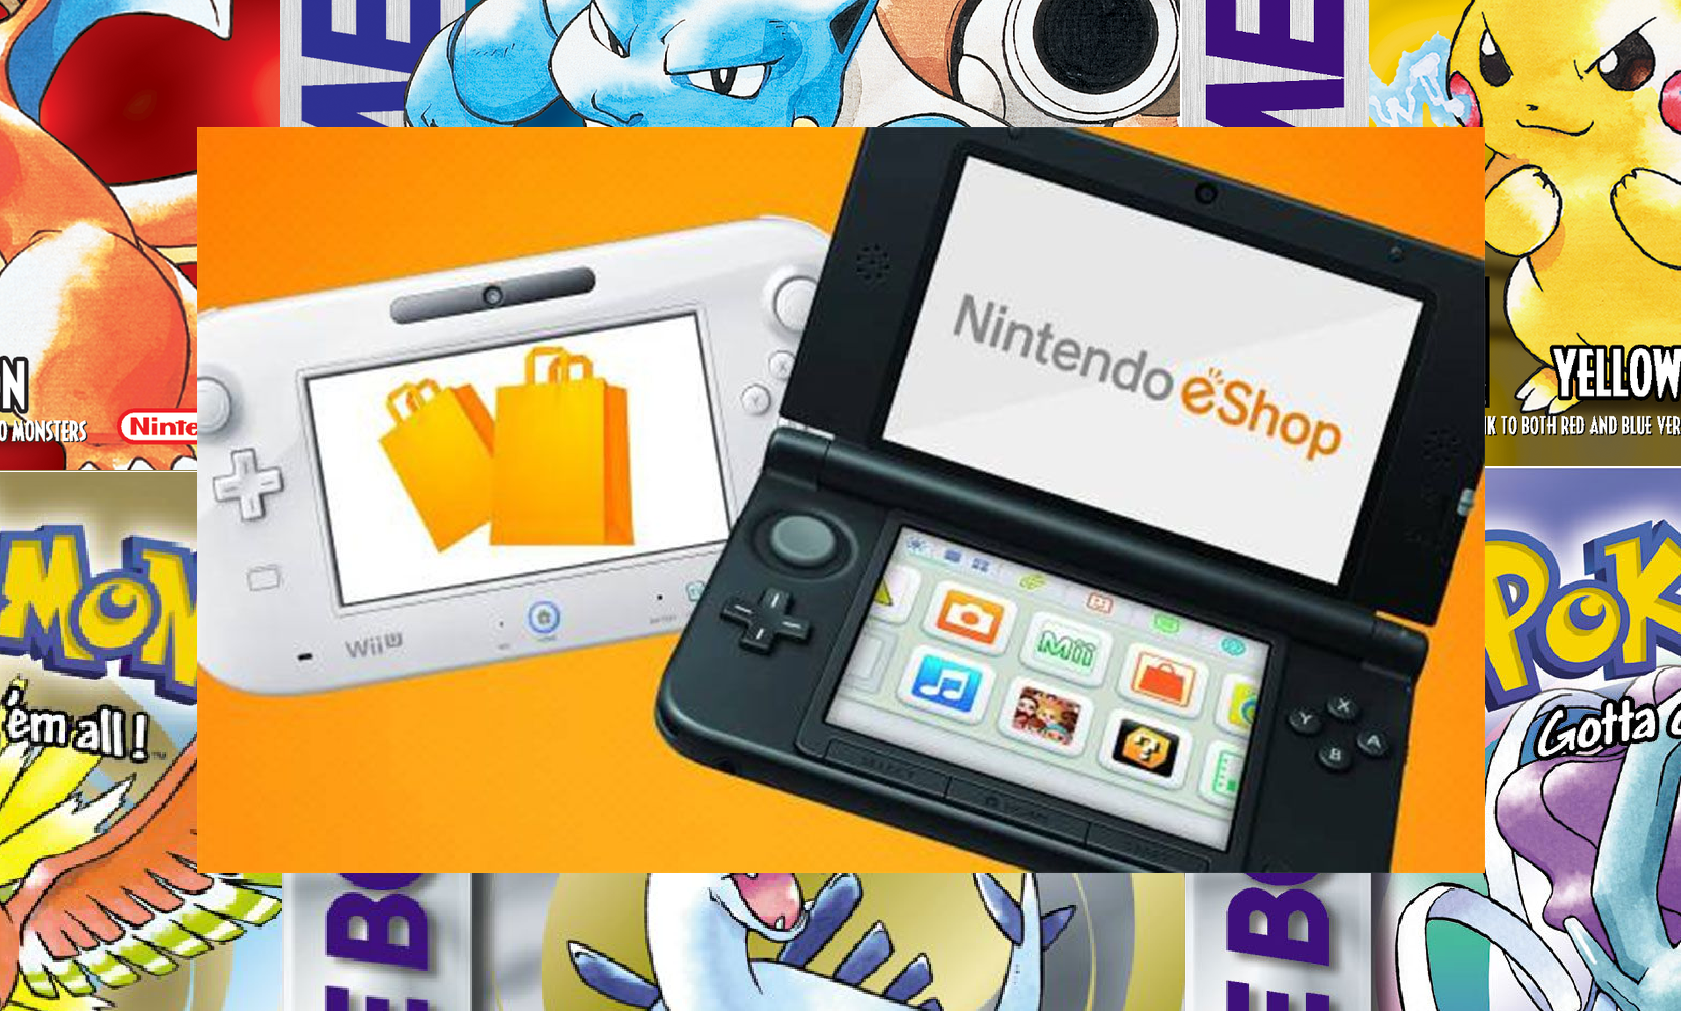 A Wii U Gamepad and 3DS XL Console, displaying Nintendo eShop logos